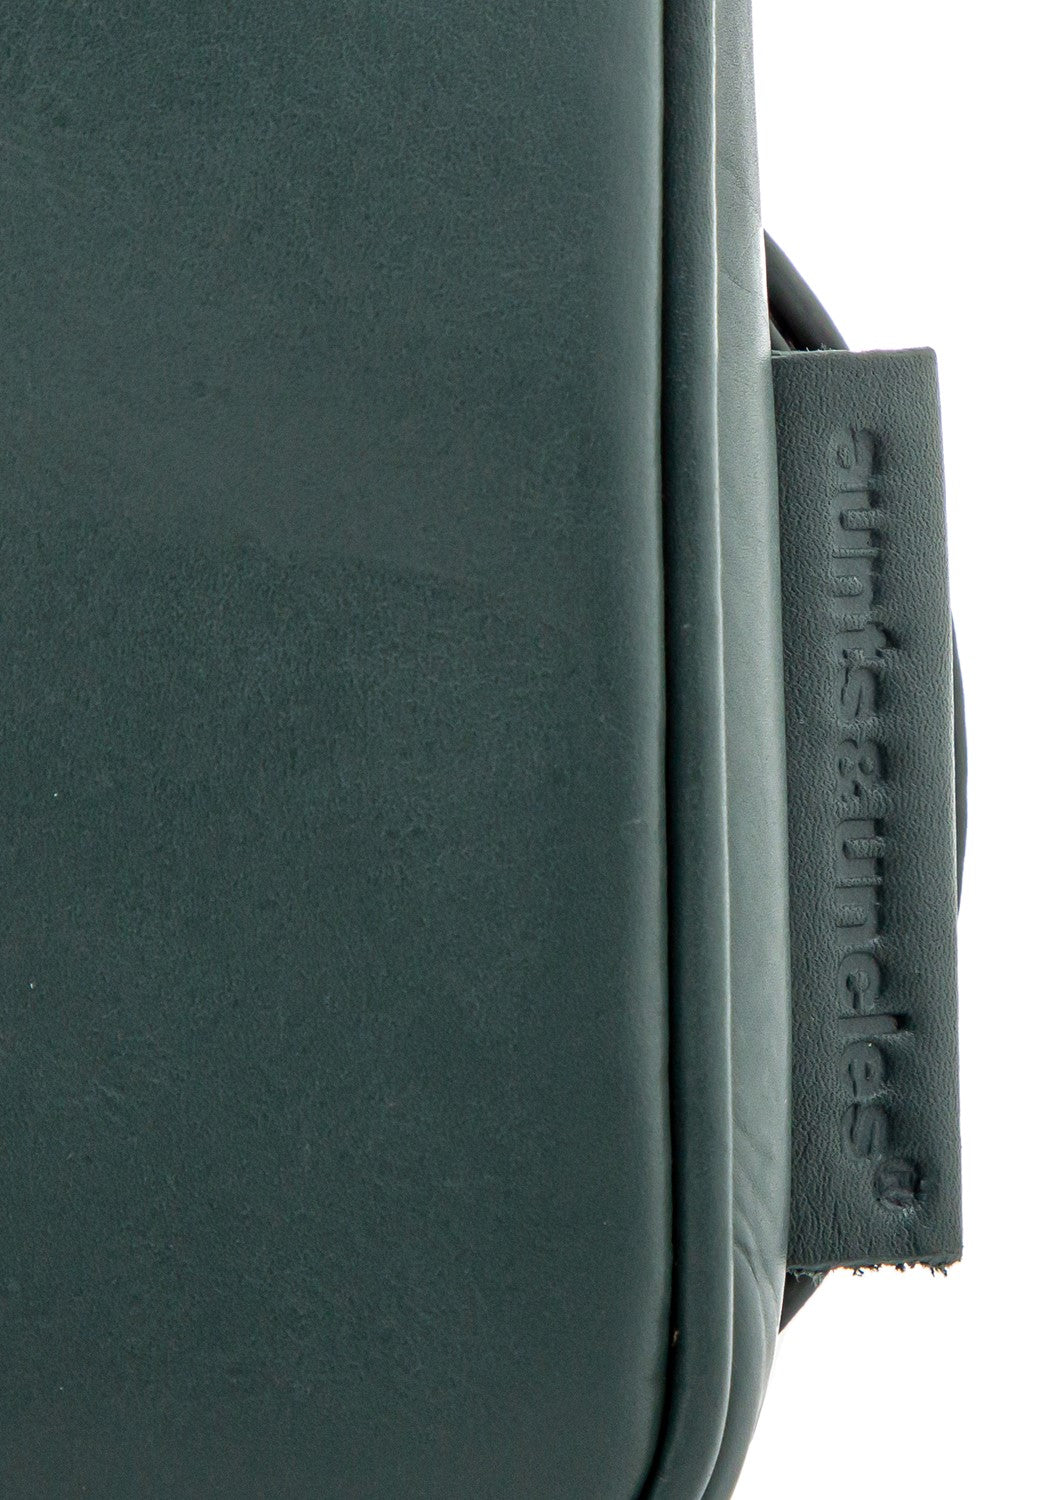 Cloudberry Phone bag  dark jade | Bildmaterial bereitgestellt von SHOES.PLEASE.